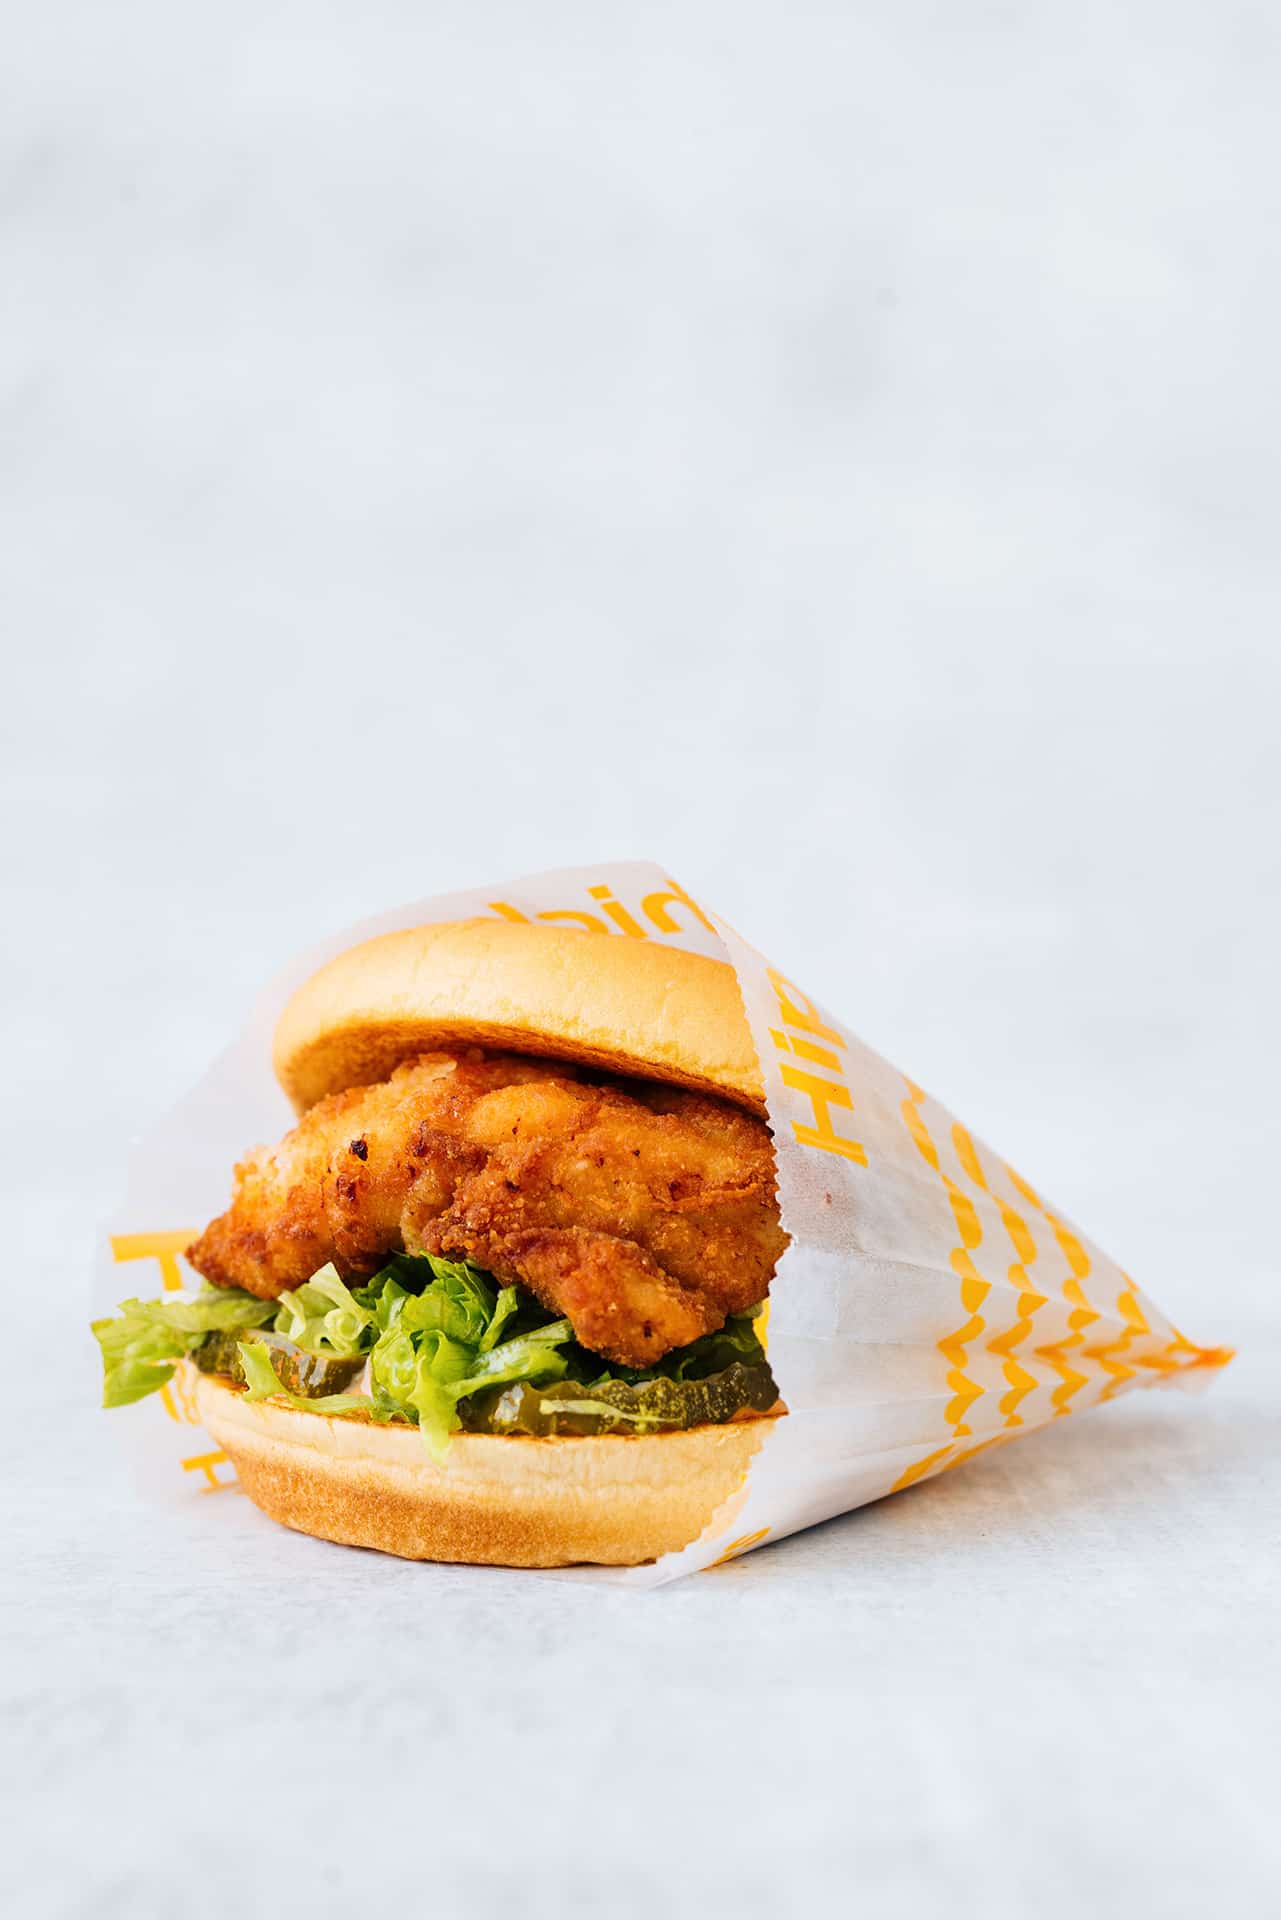 HipBurger burger food truck branding and package design